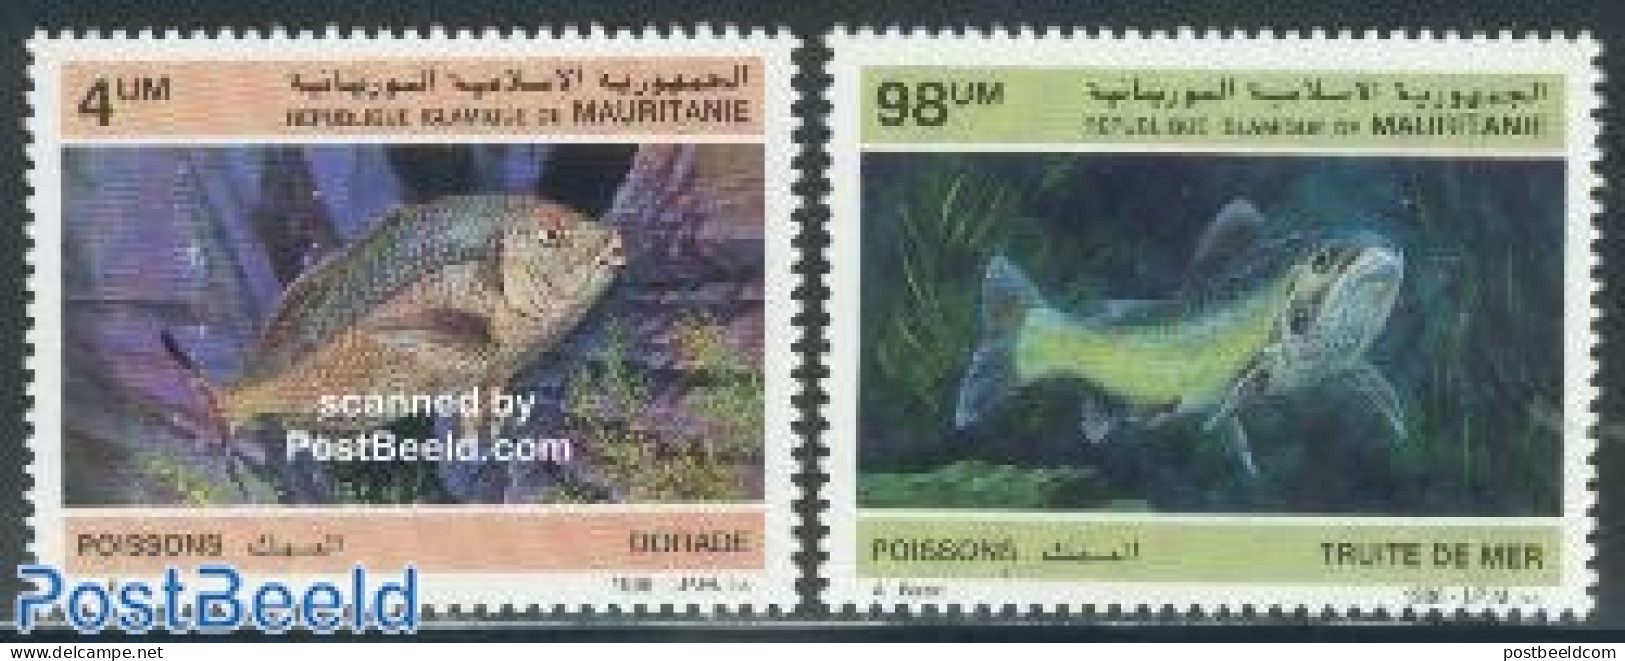 Mauritania 1986 Fish 2v, Mint NH, Nature - Fish - Fishes